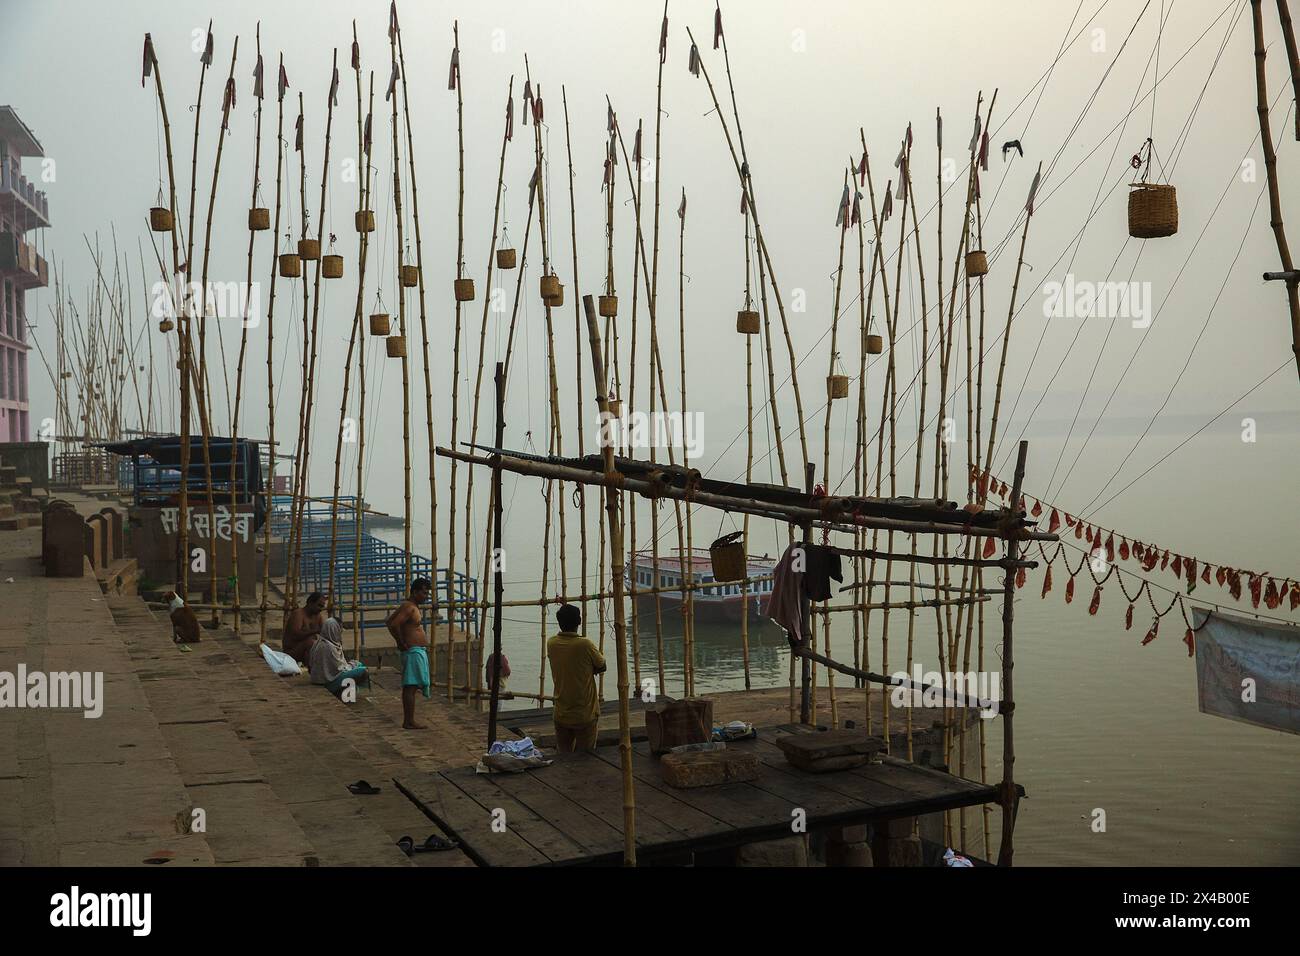 Korbkörbe hängen an langen Bambusstangen am Ufer des Ganges bei Varanasi, Indien. Stockfoto